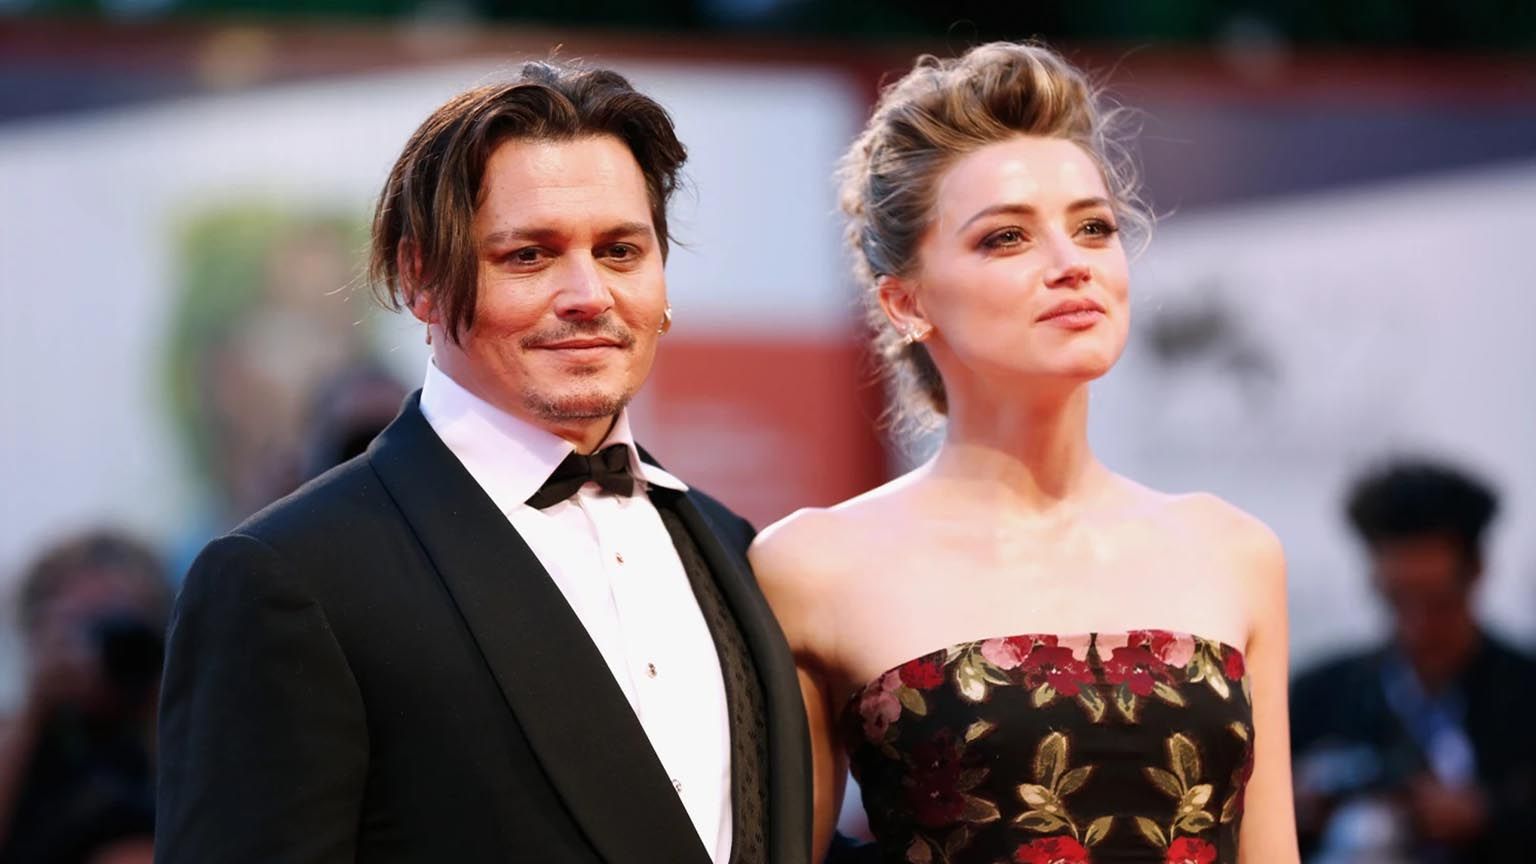 Johnny Depp wins case versus ex-wife Amber Heard photo NBC News